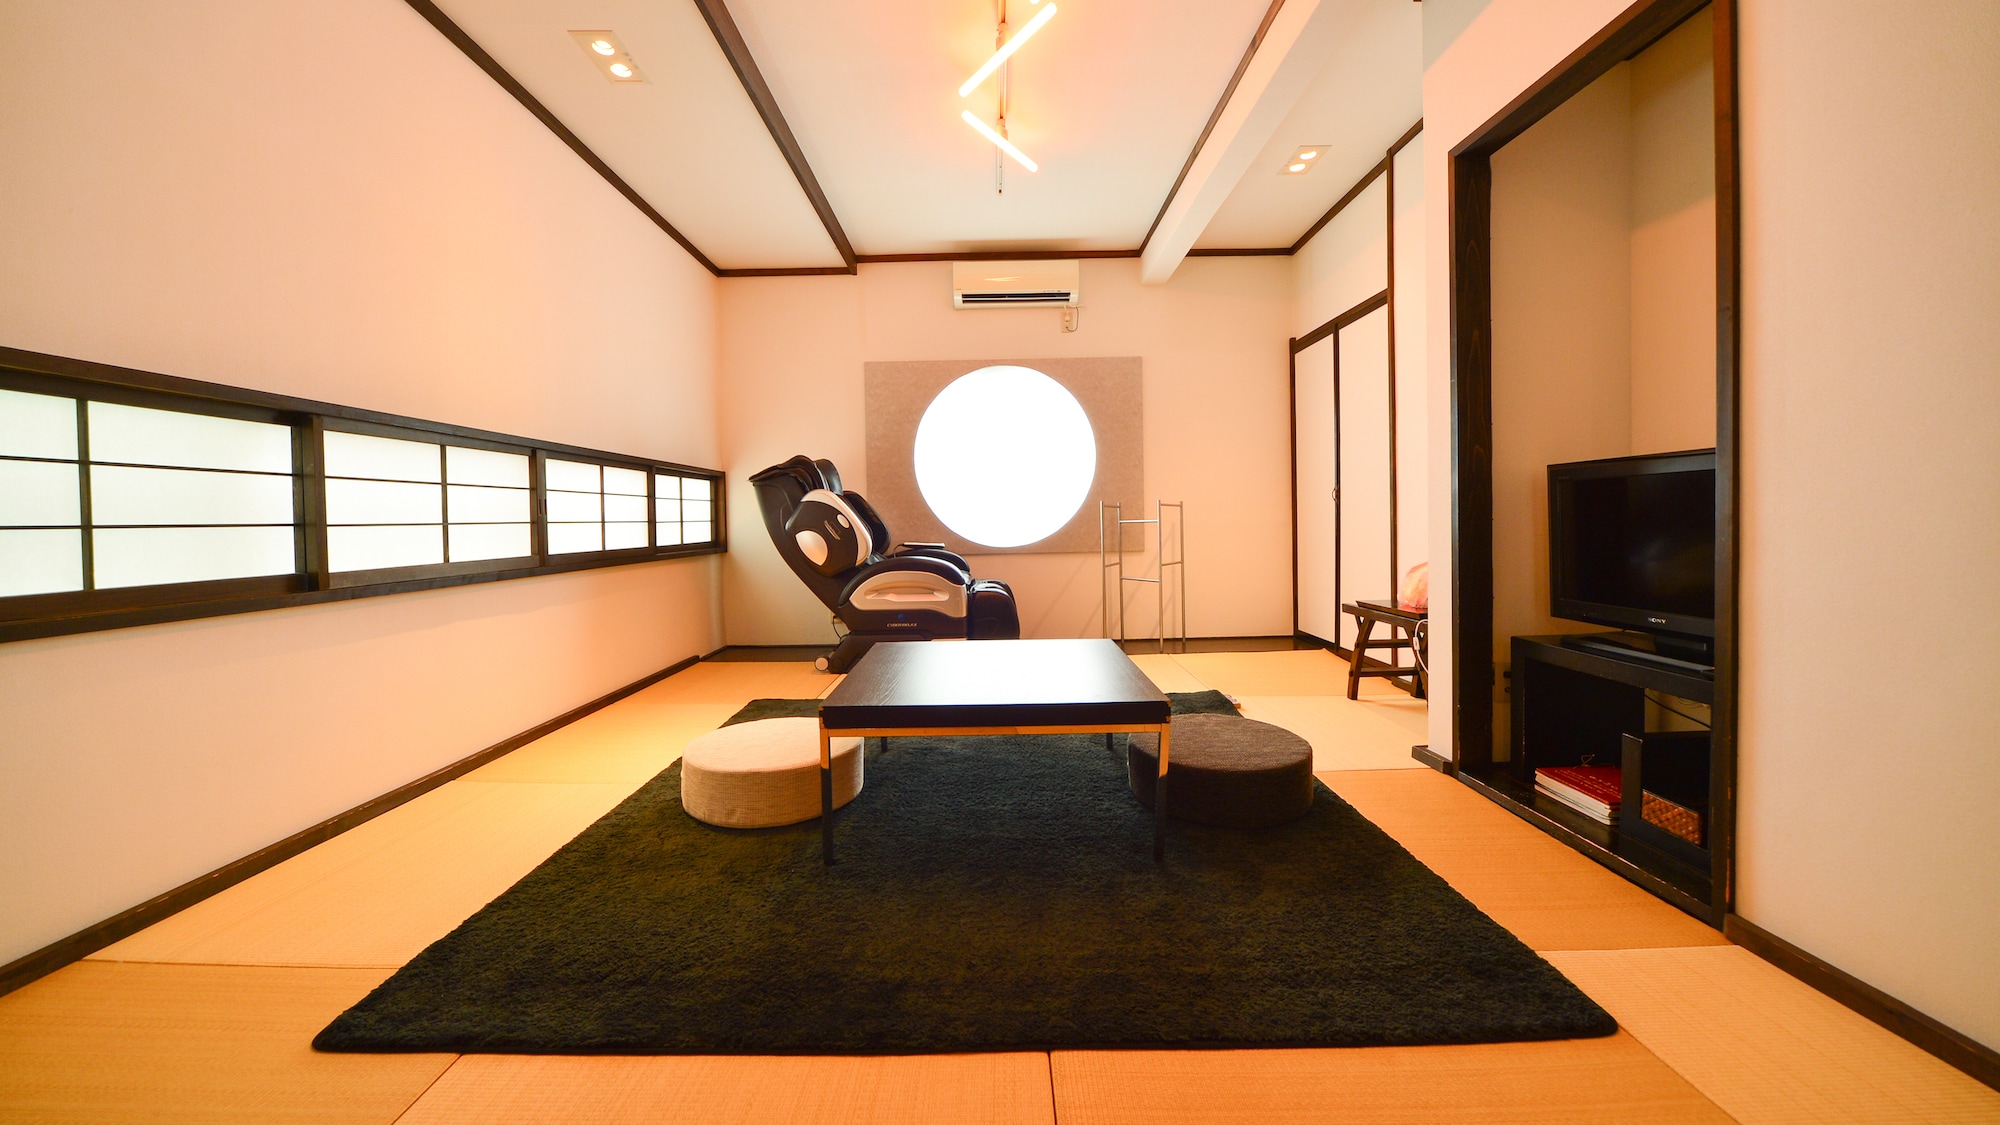 Kagirohi 日式和西式房间 设计师风格的日式房间 8 张榻榻米 + 卧室 8 张榻榻米